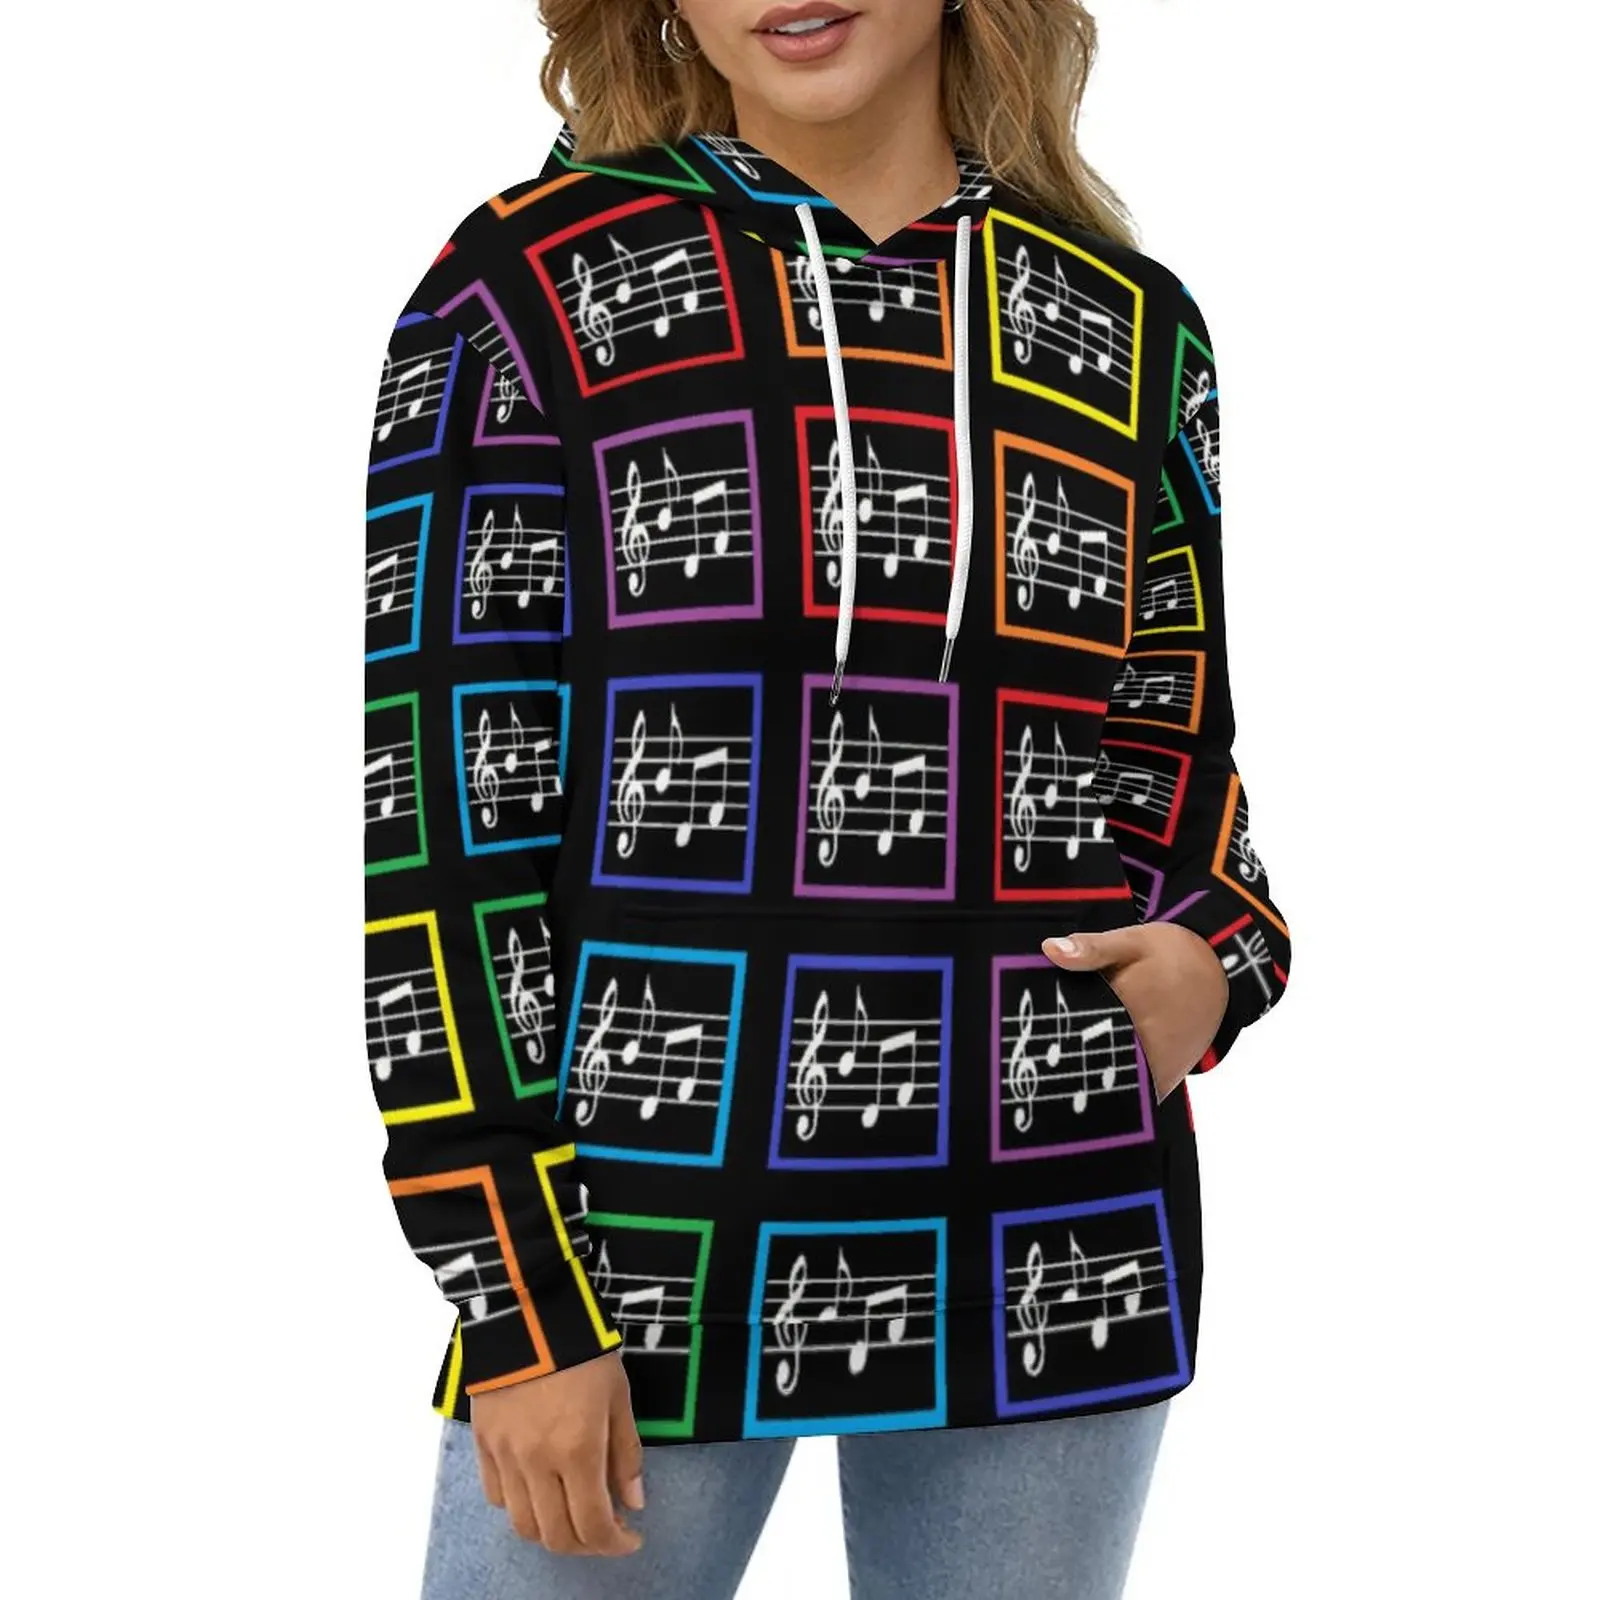 

Music Squares Hoodies Woman Rainbow Framed Korean Fashion Casual Hoodie Autumn Aesthetic Design Sweatshirts Large Size 5XL 6XL